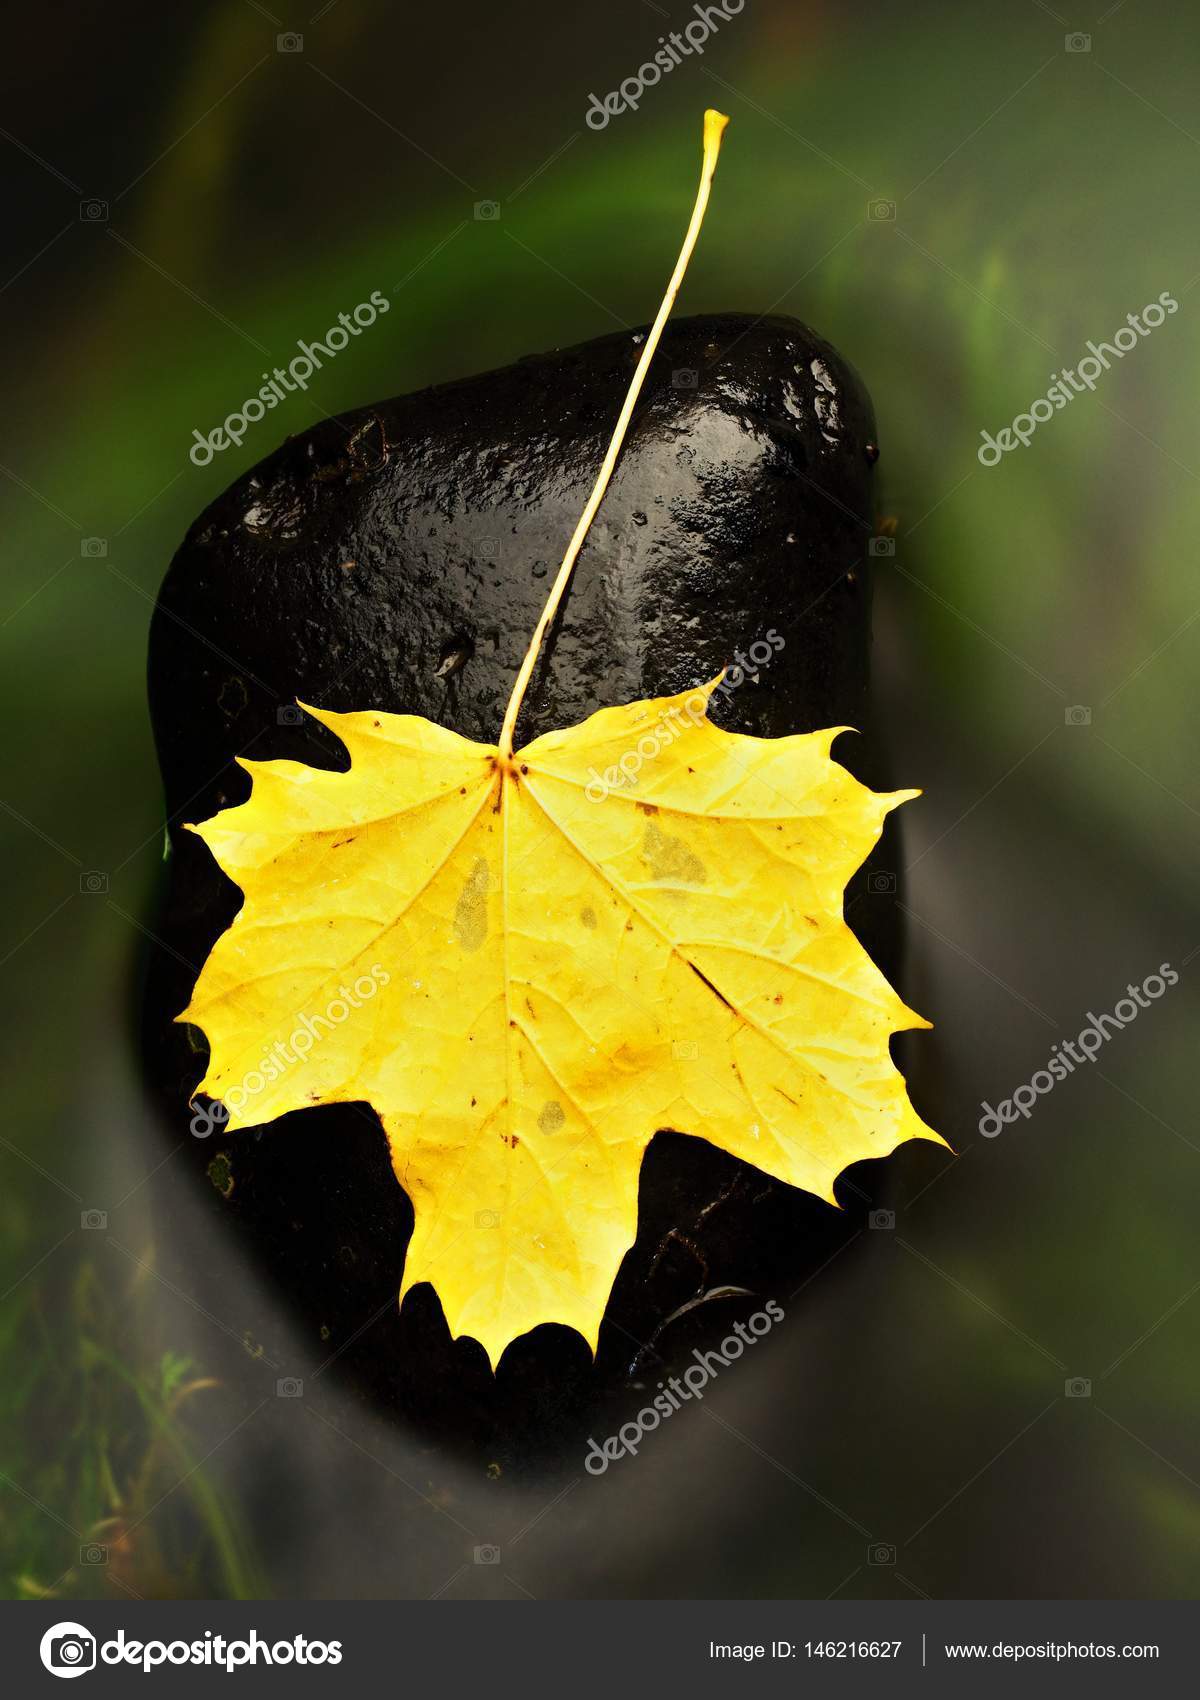 Fallen dry maple leaf on water, leaf stick on stone in stream ...